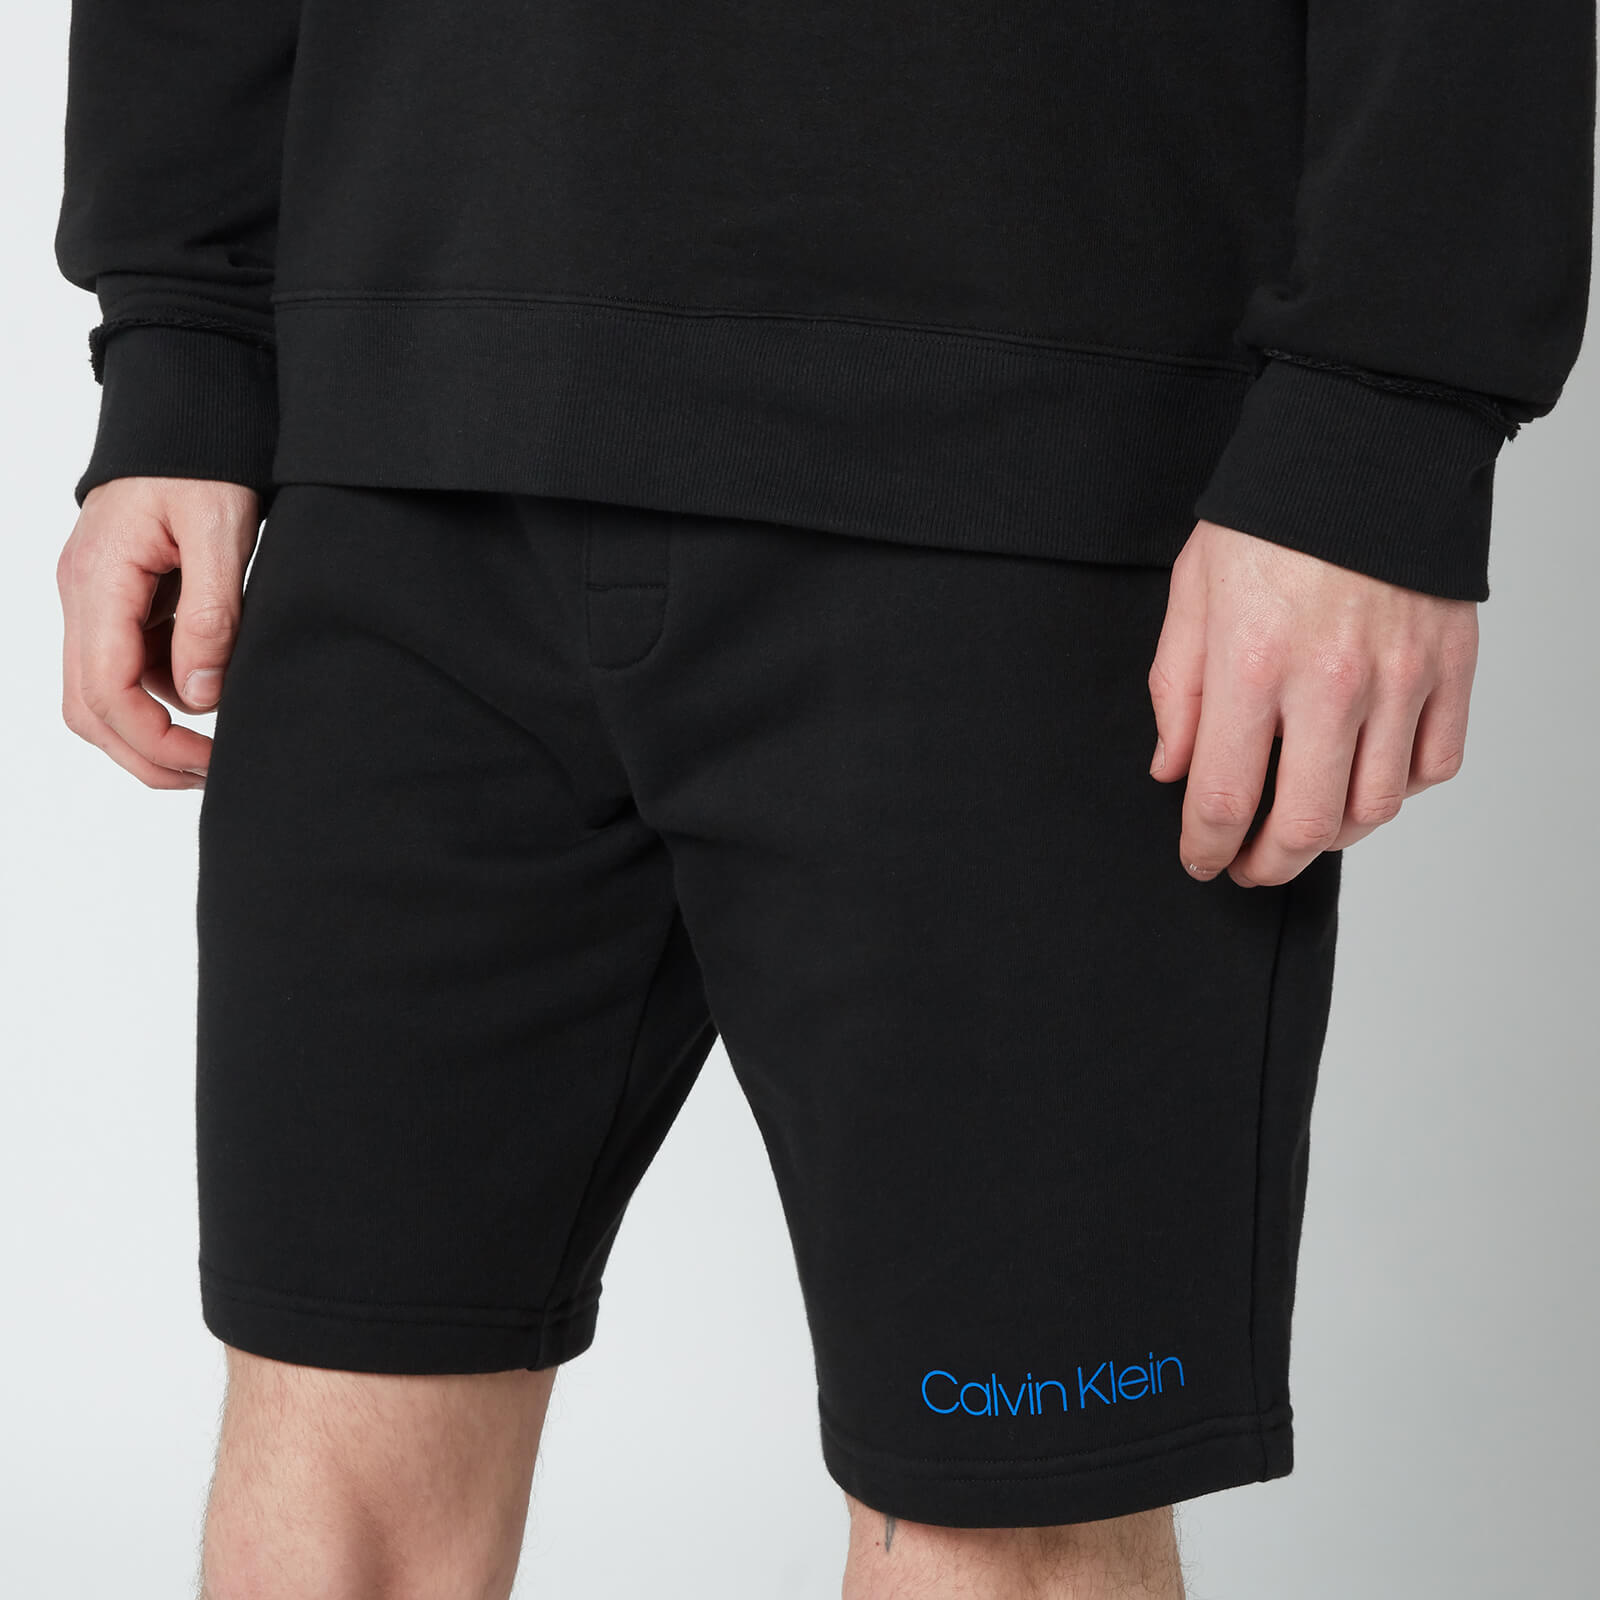 Calvin Klein Men's Sleep Shorts - Black - L